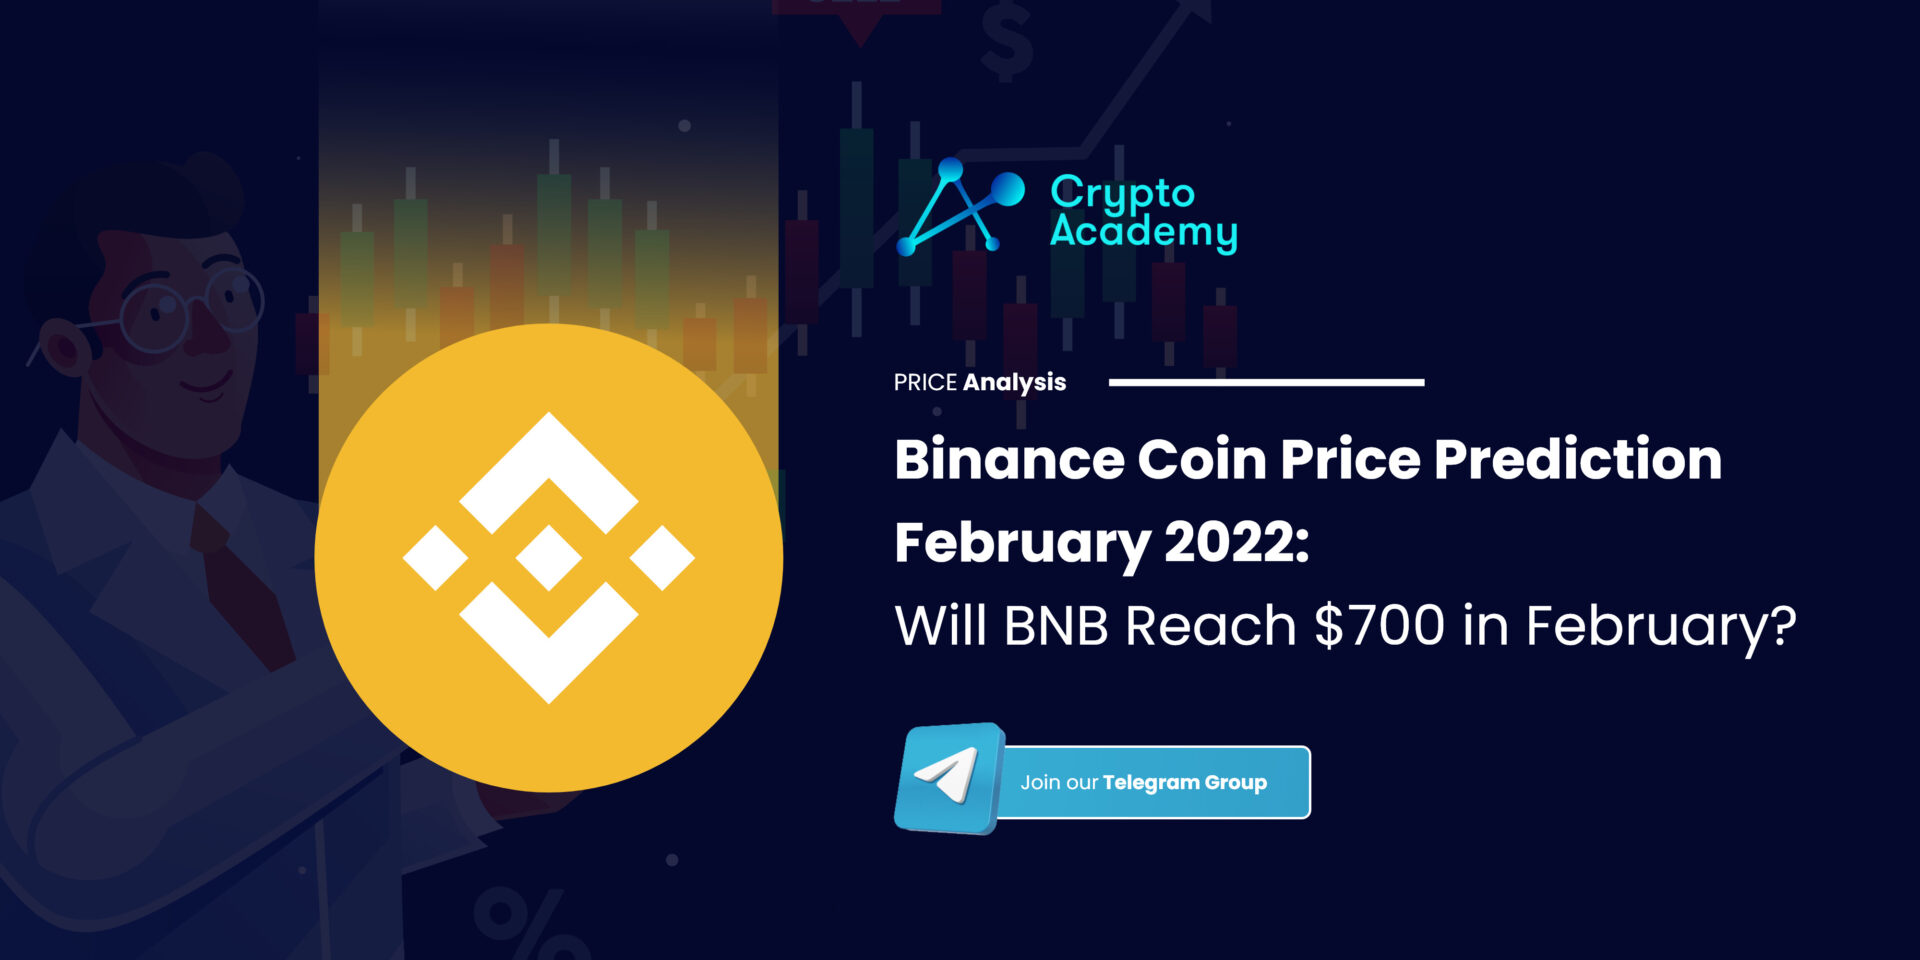 Binance Coin Price Prediction February 2022: Will BNB Reach $700 in February?